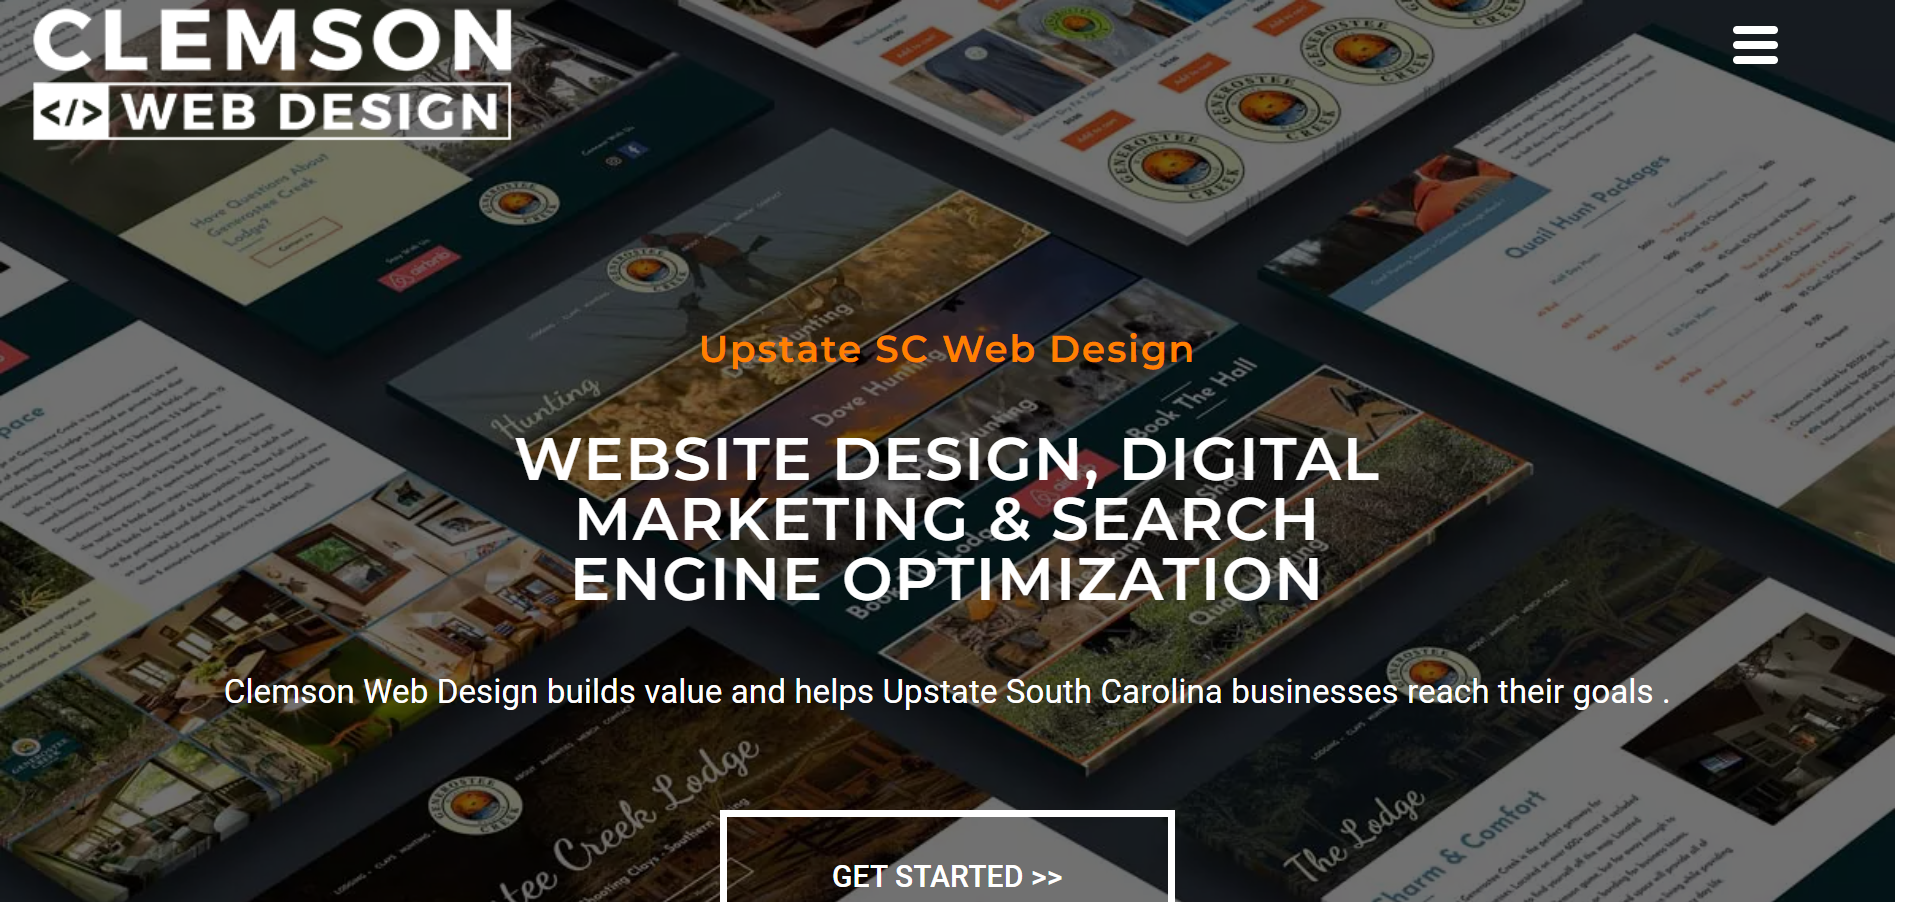 Clemson Web Design Company